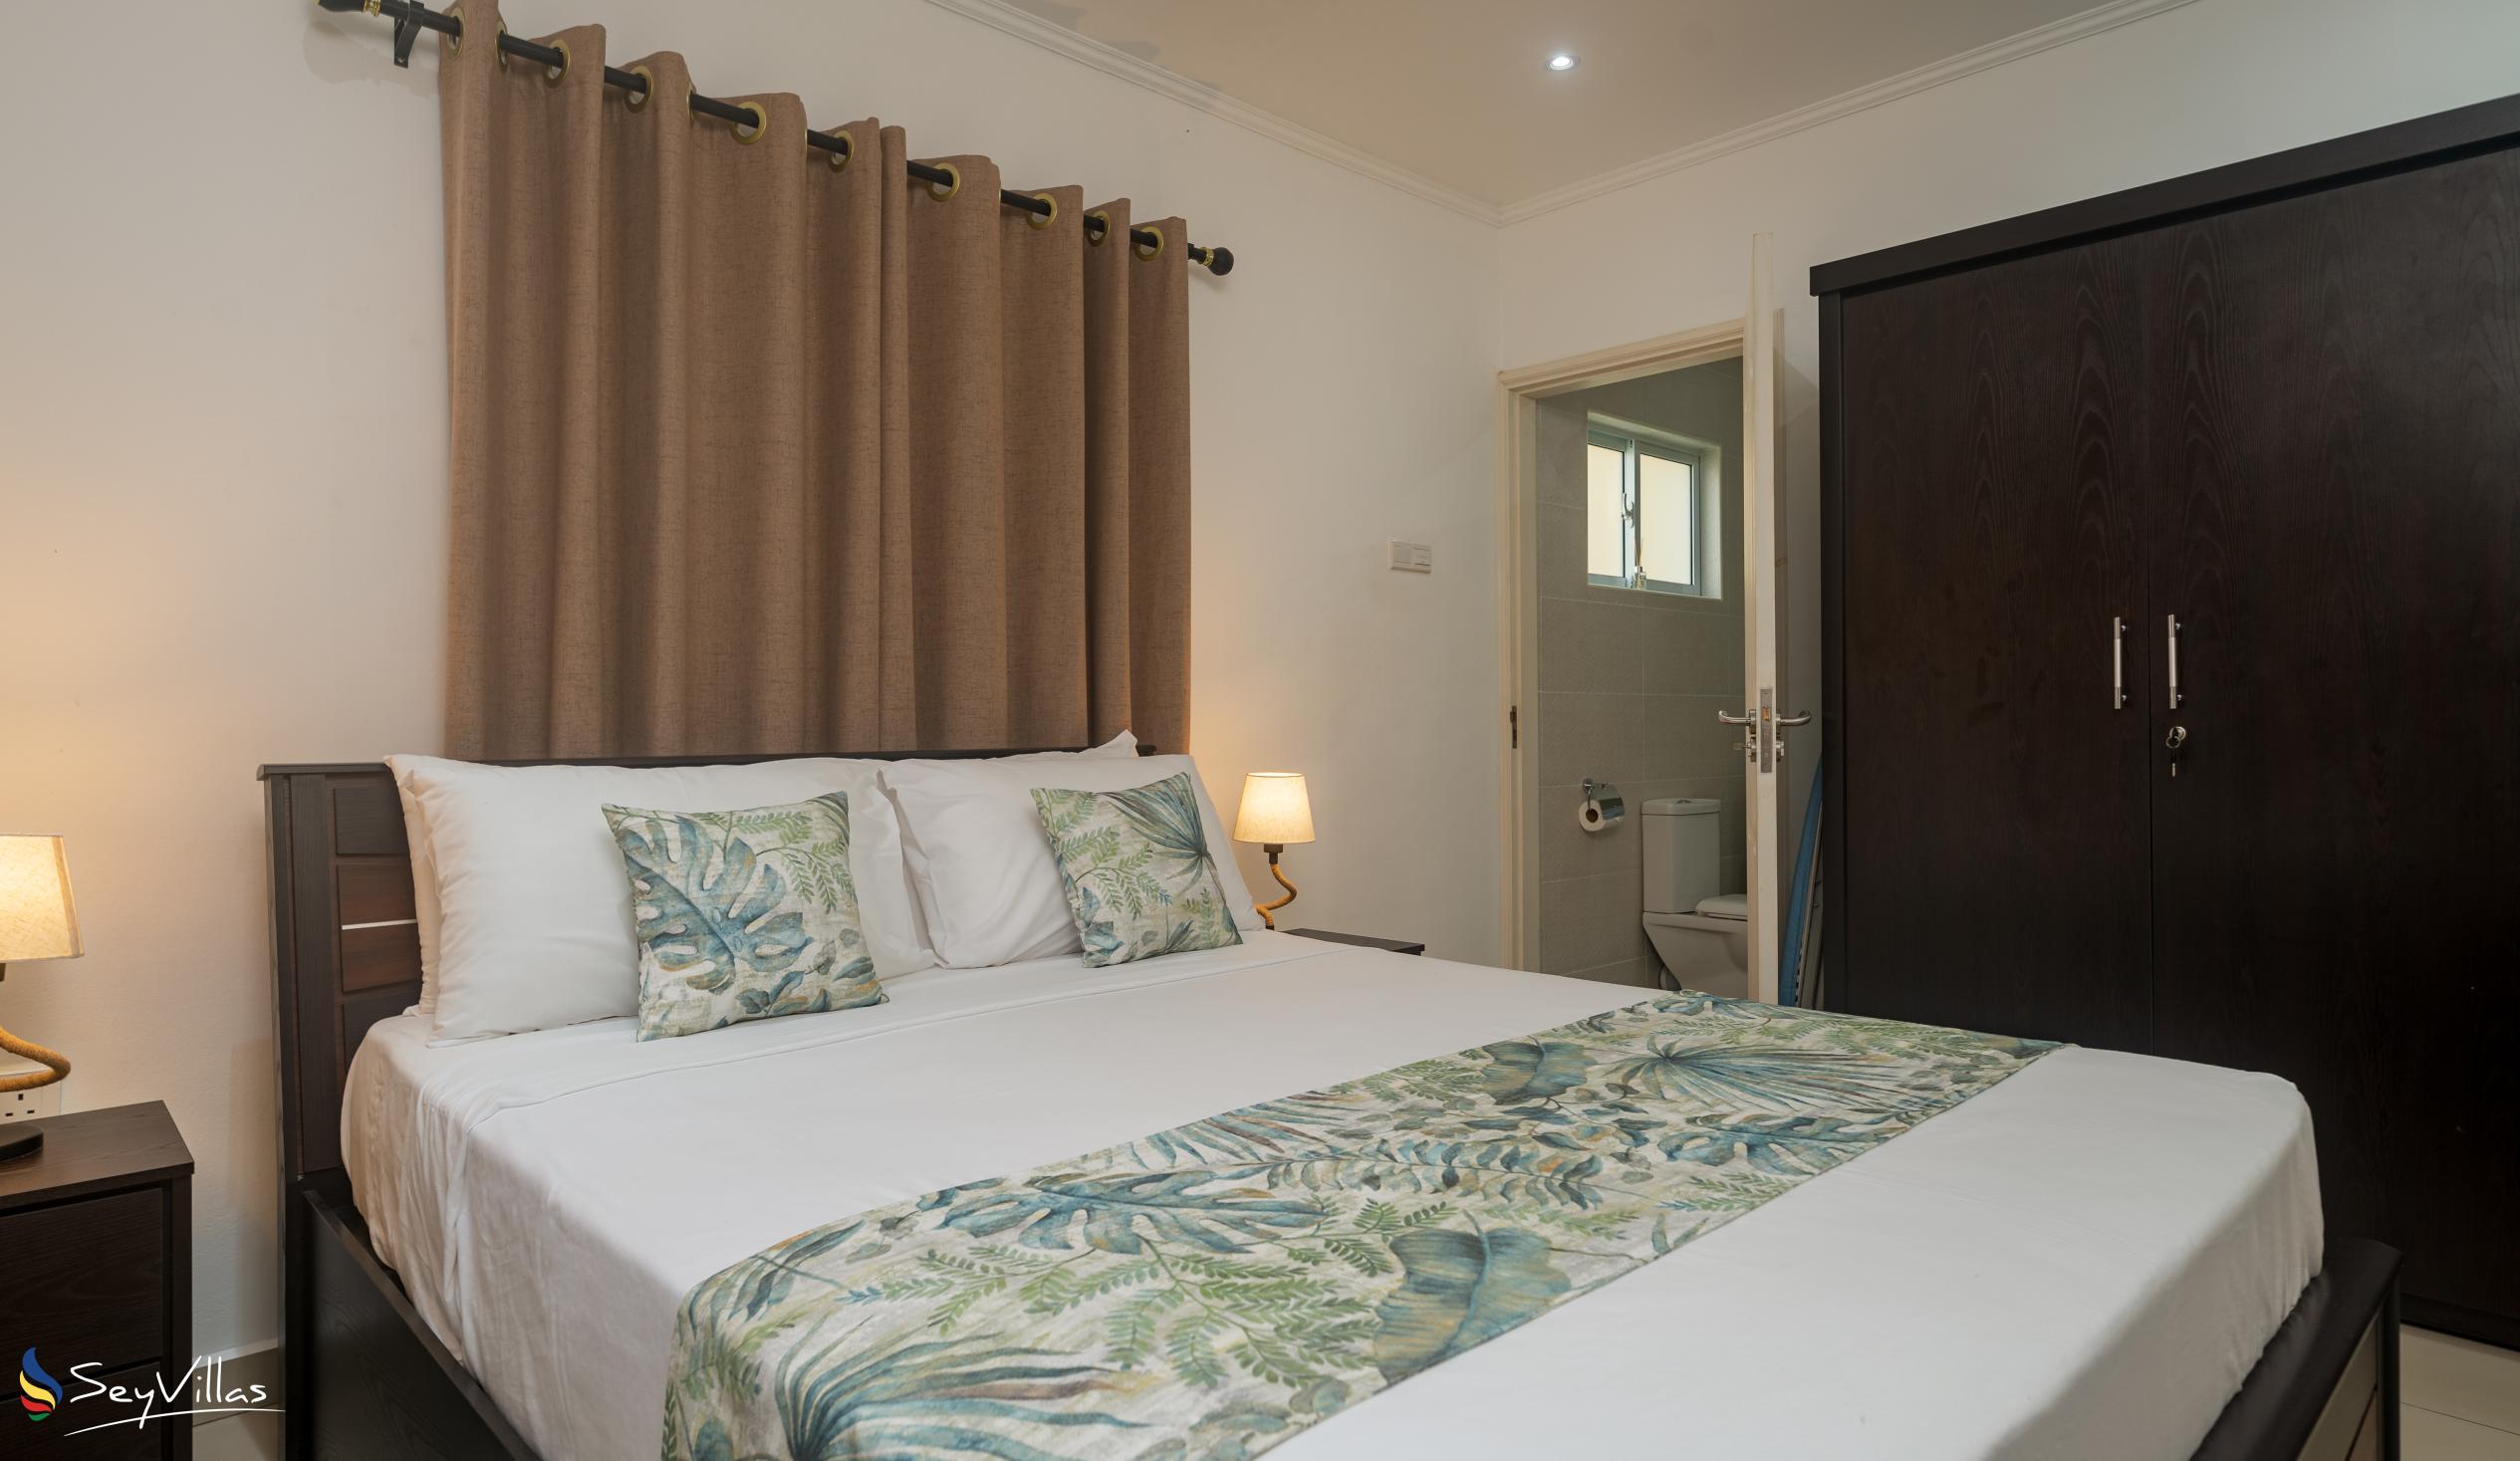 Foto 20: Paul's Residence - Appartamento con 1 camera - Mahé (Seychelles)